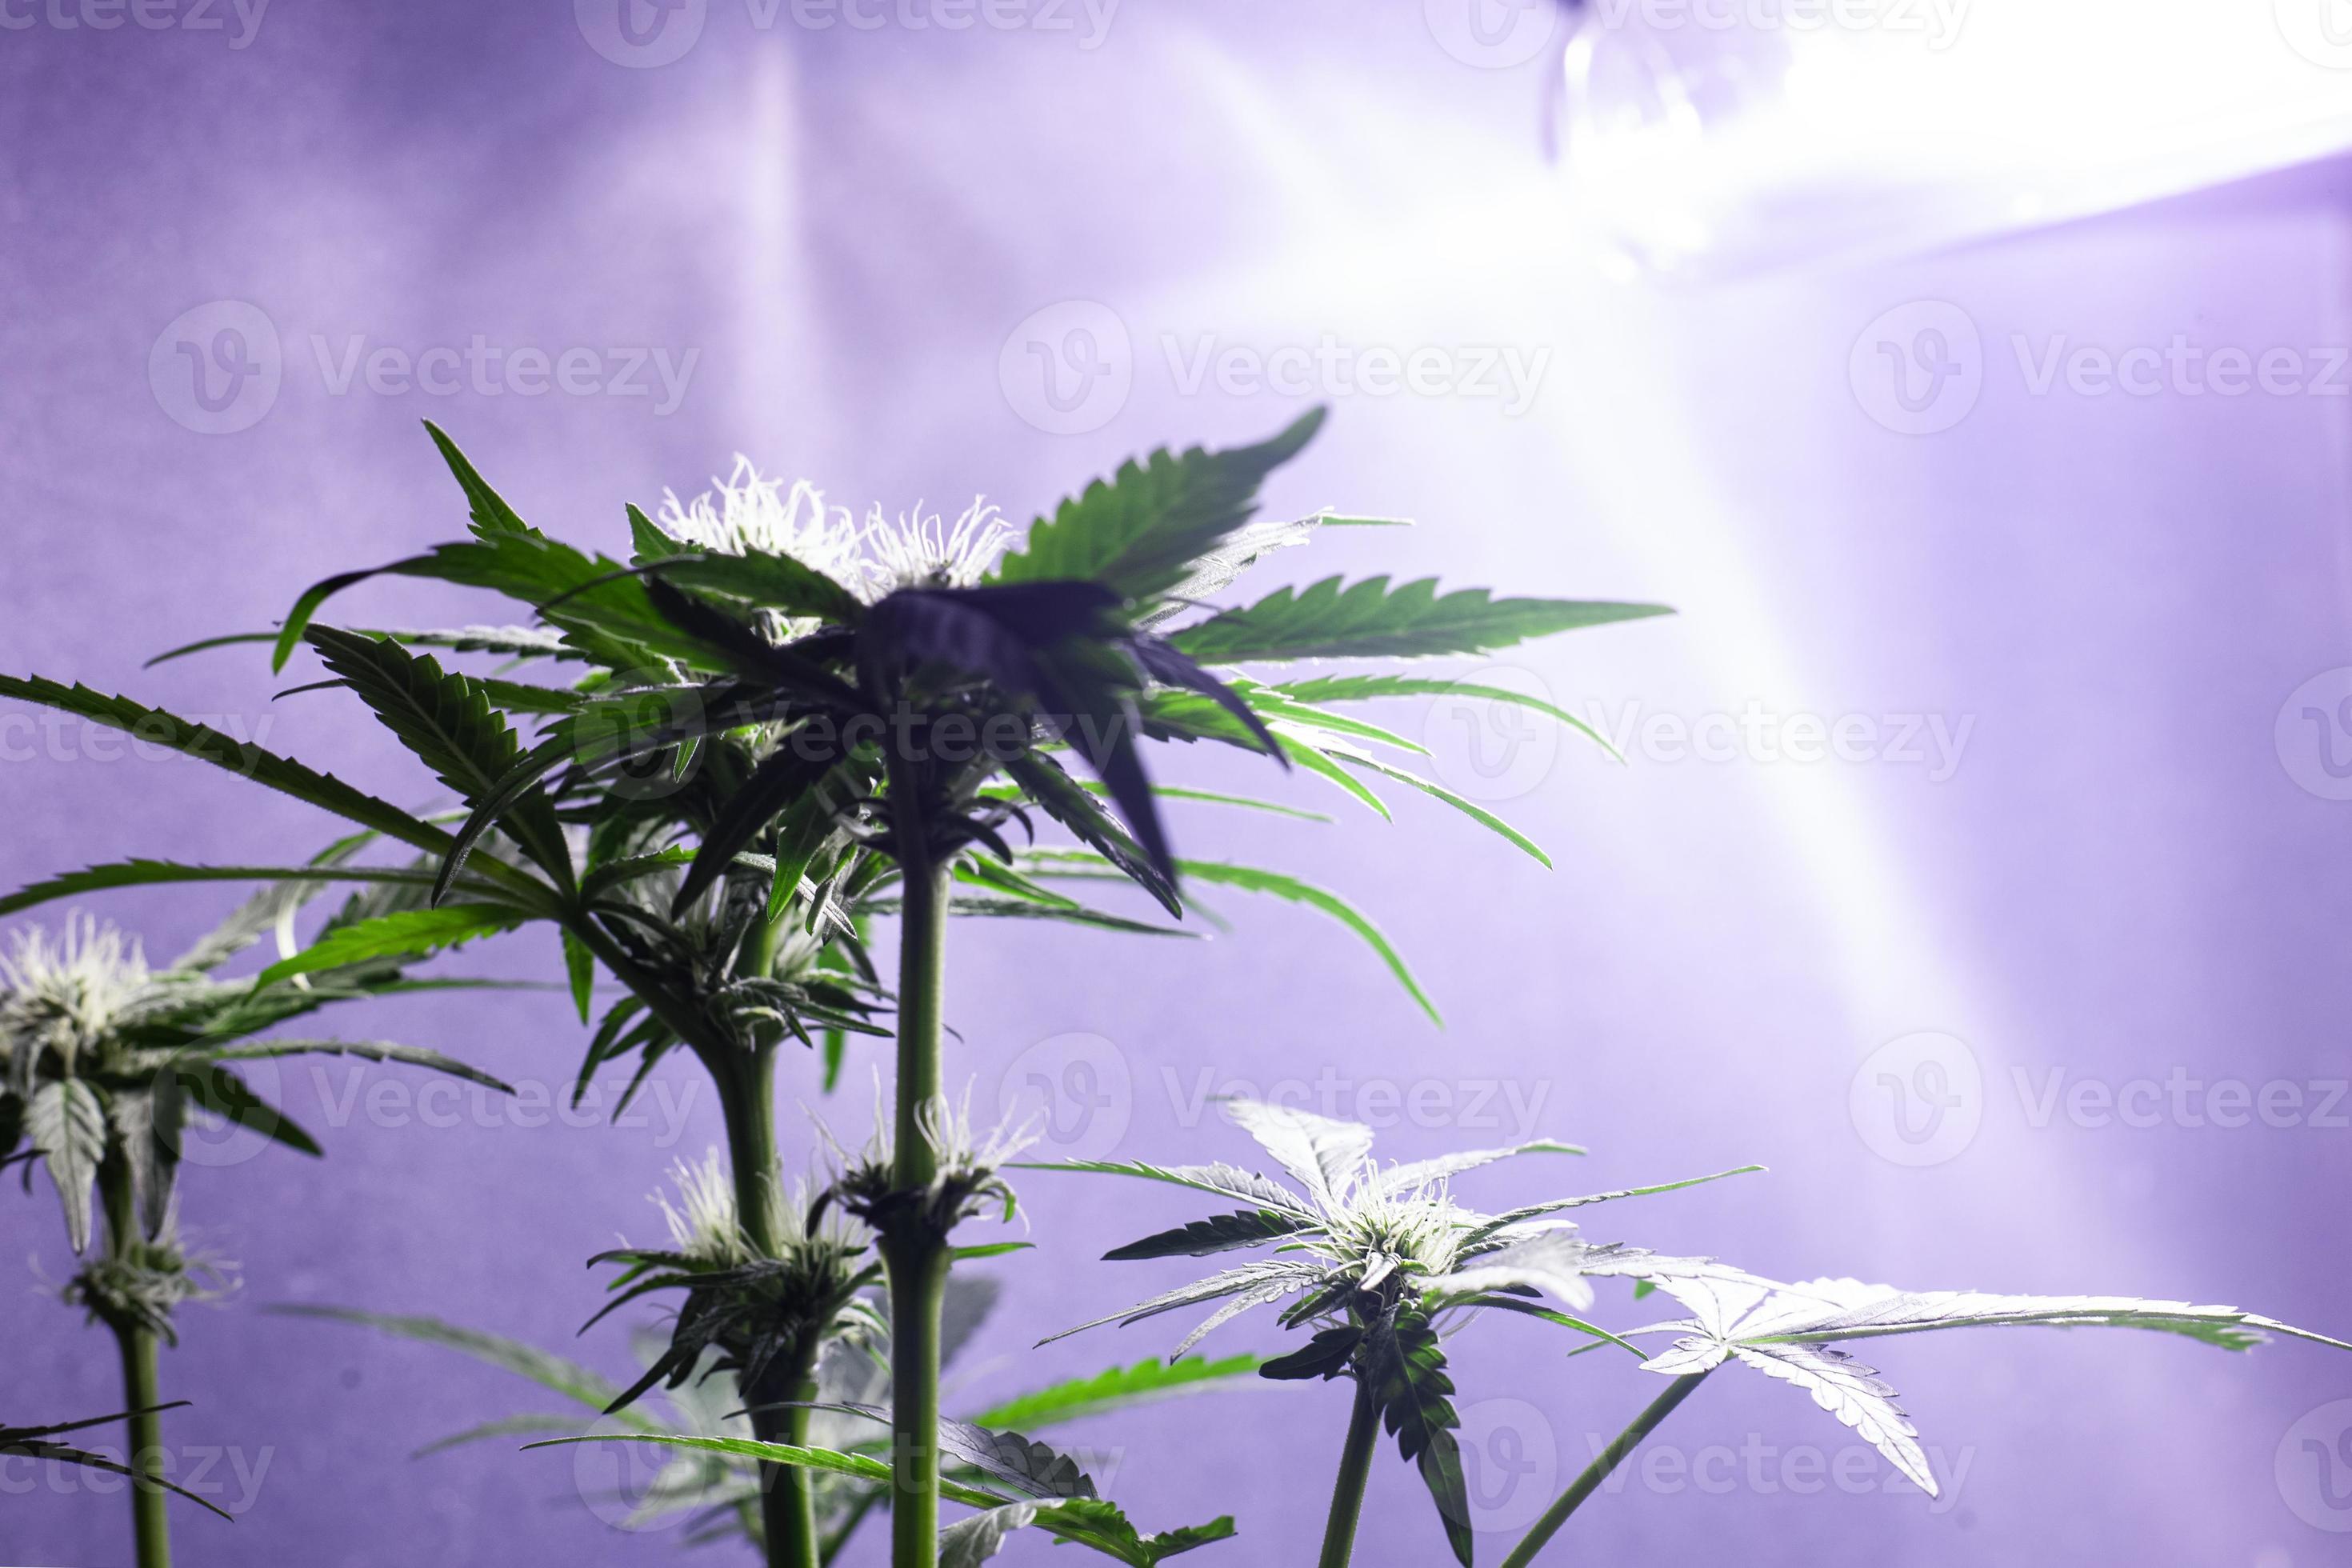 cultivo de cannabis em ambientes fechados sob lâmpadas de luz artificial foto